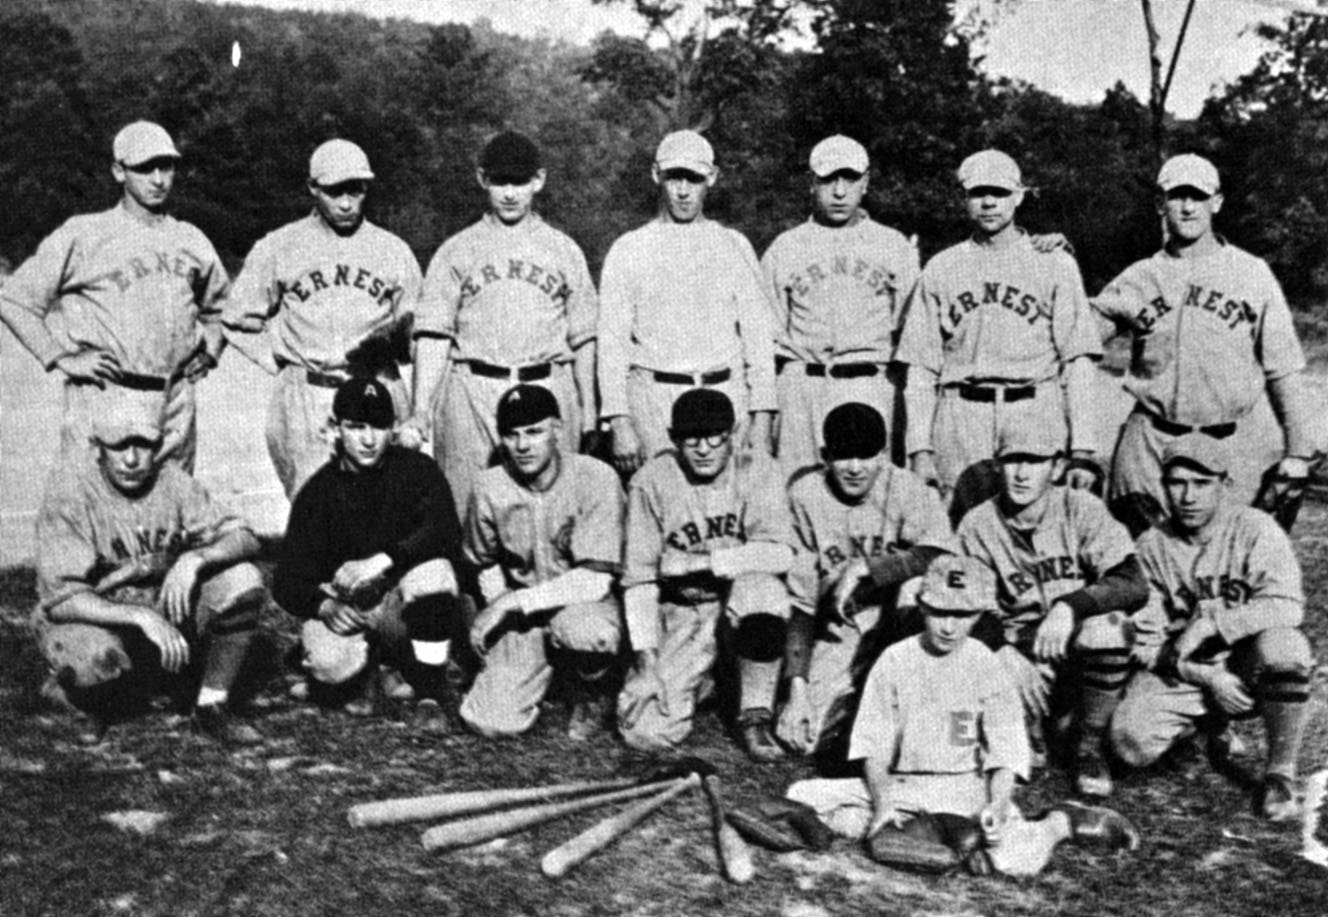 Ernest Baseball Team